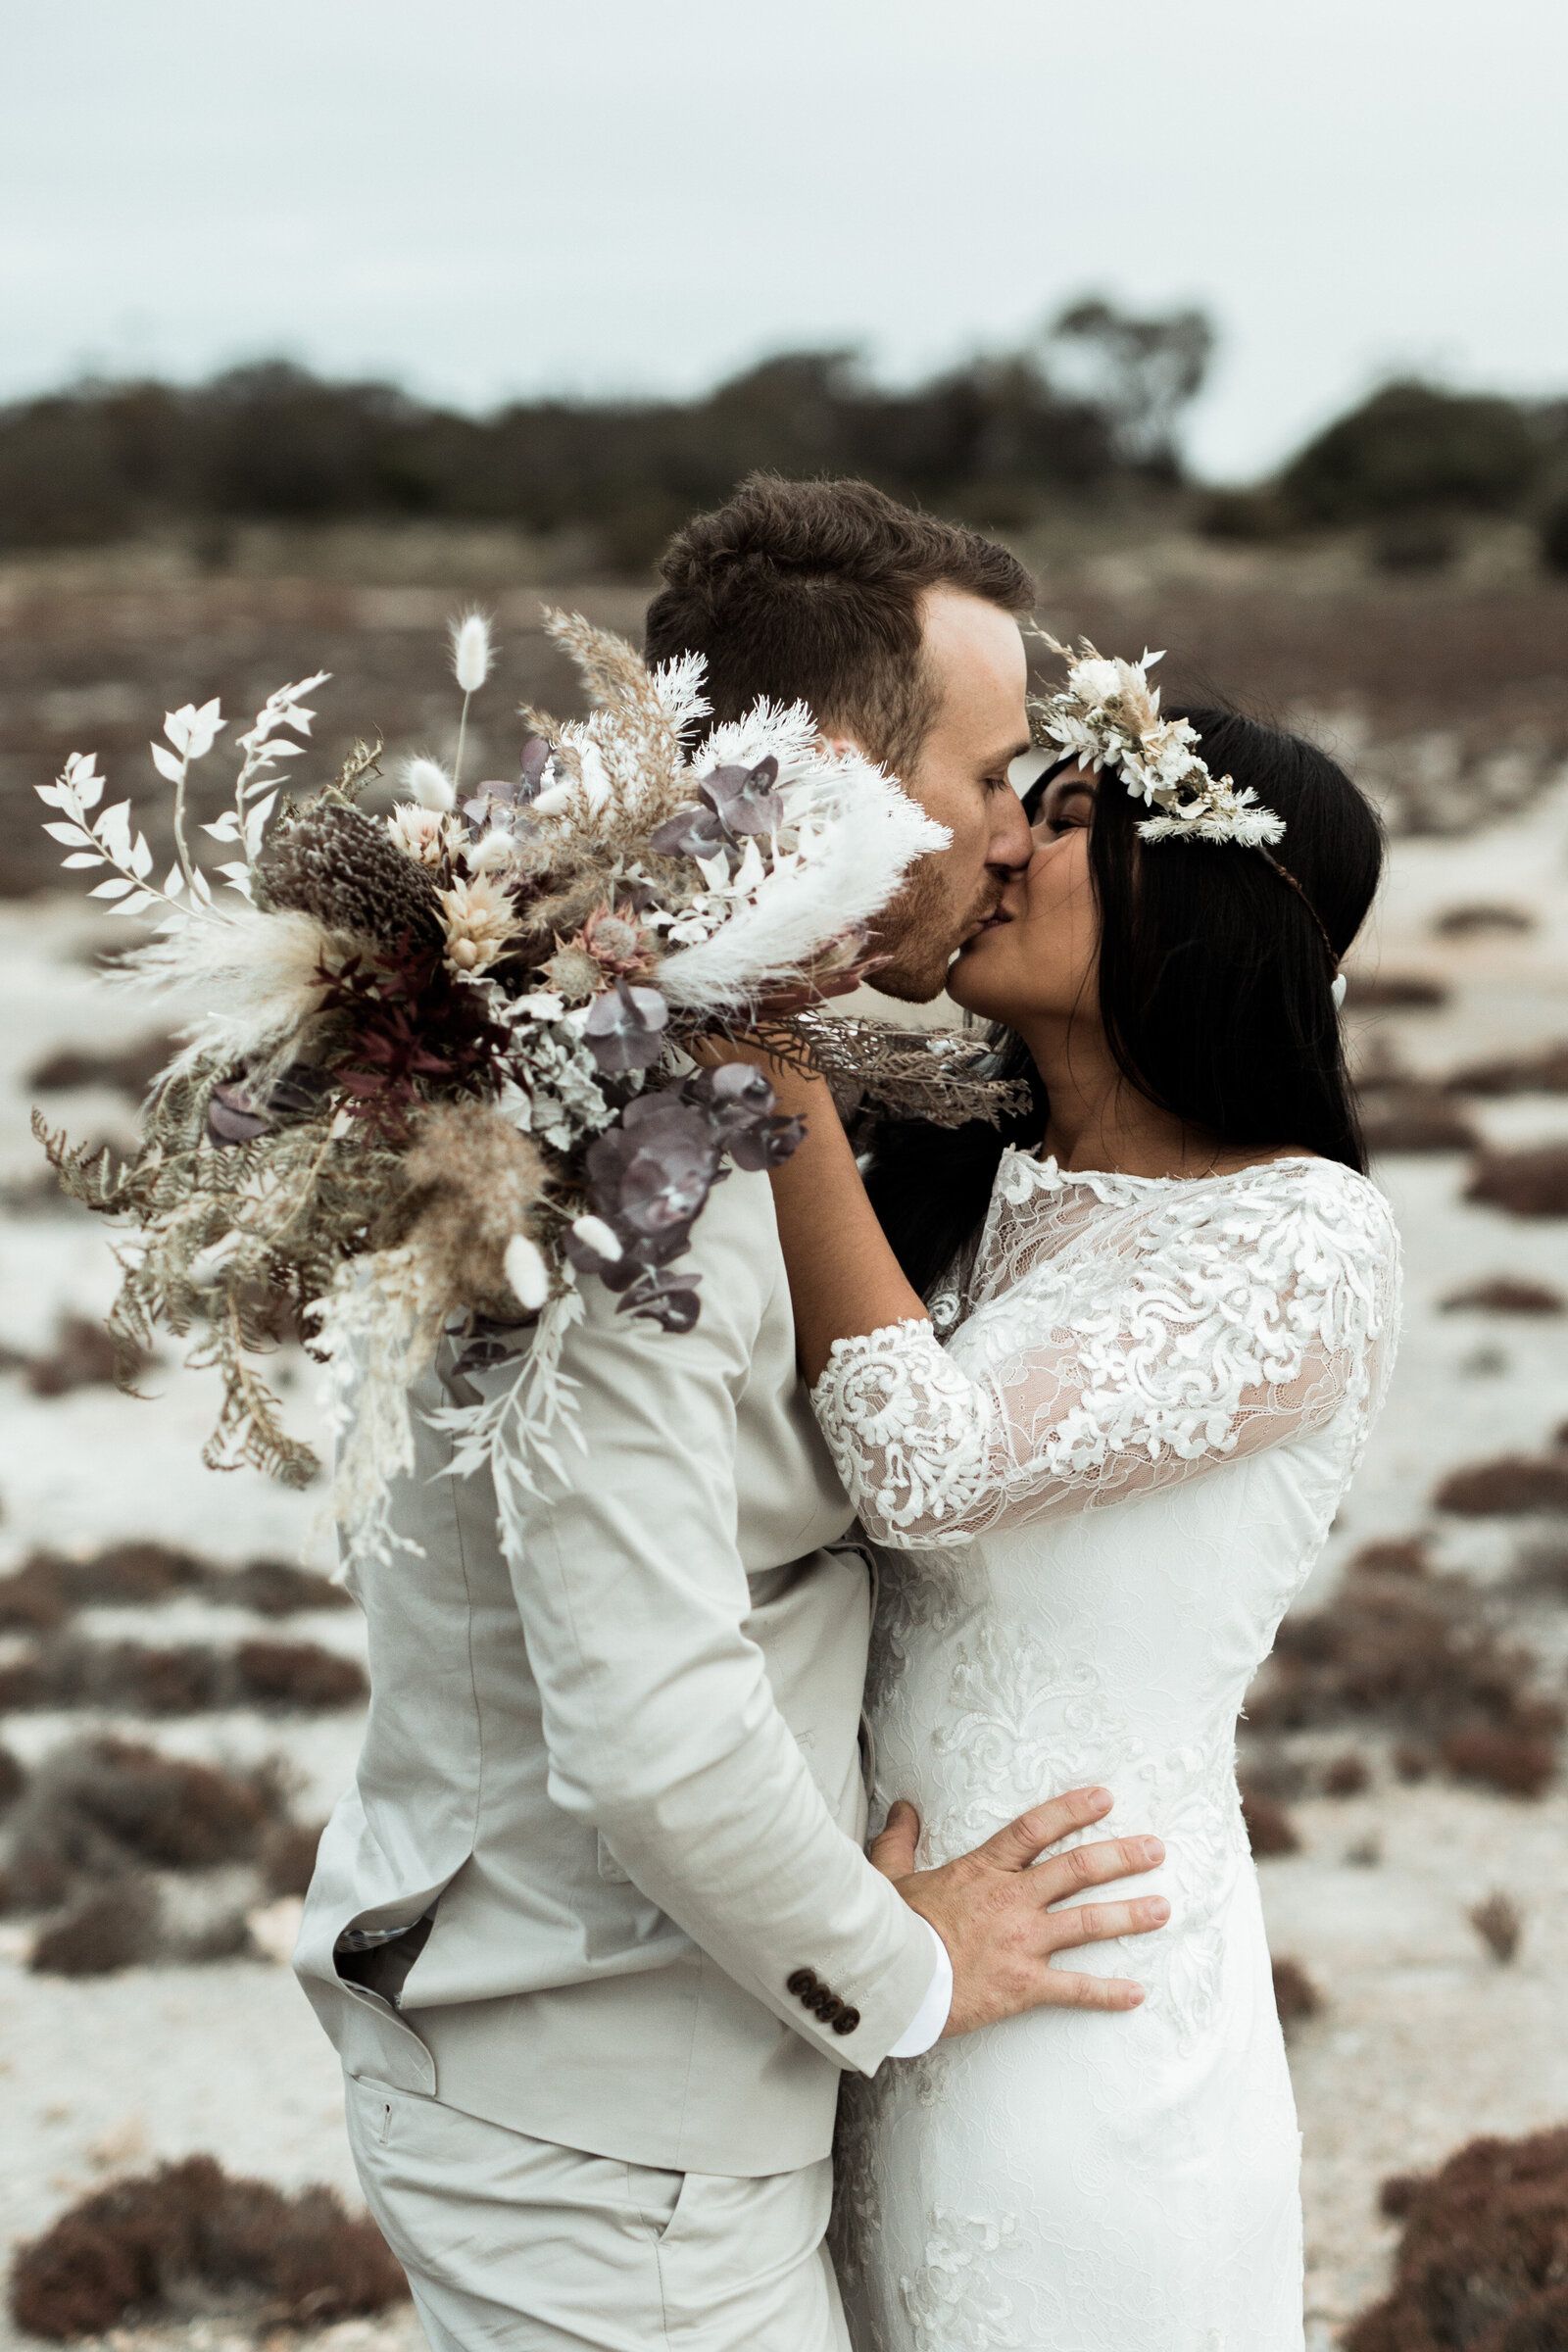 Methona-Sebastian-Rexvil-Photography-Adelaide-Wedding-Photographer-366